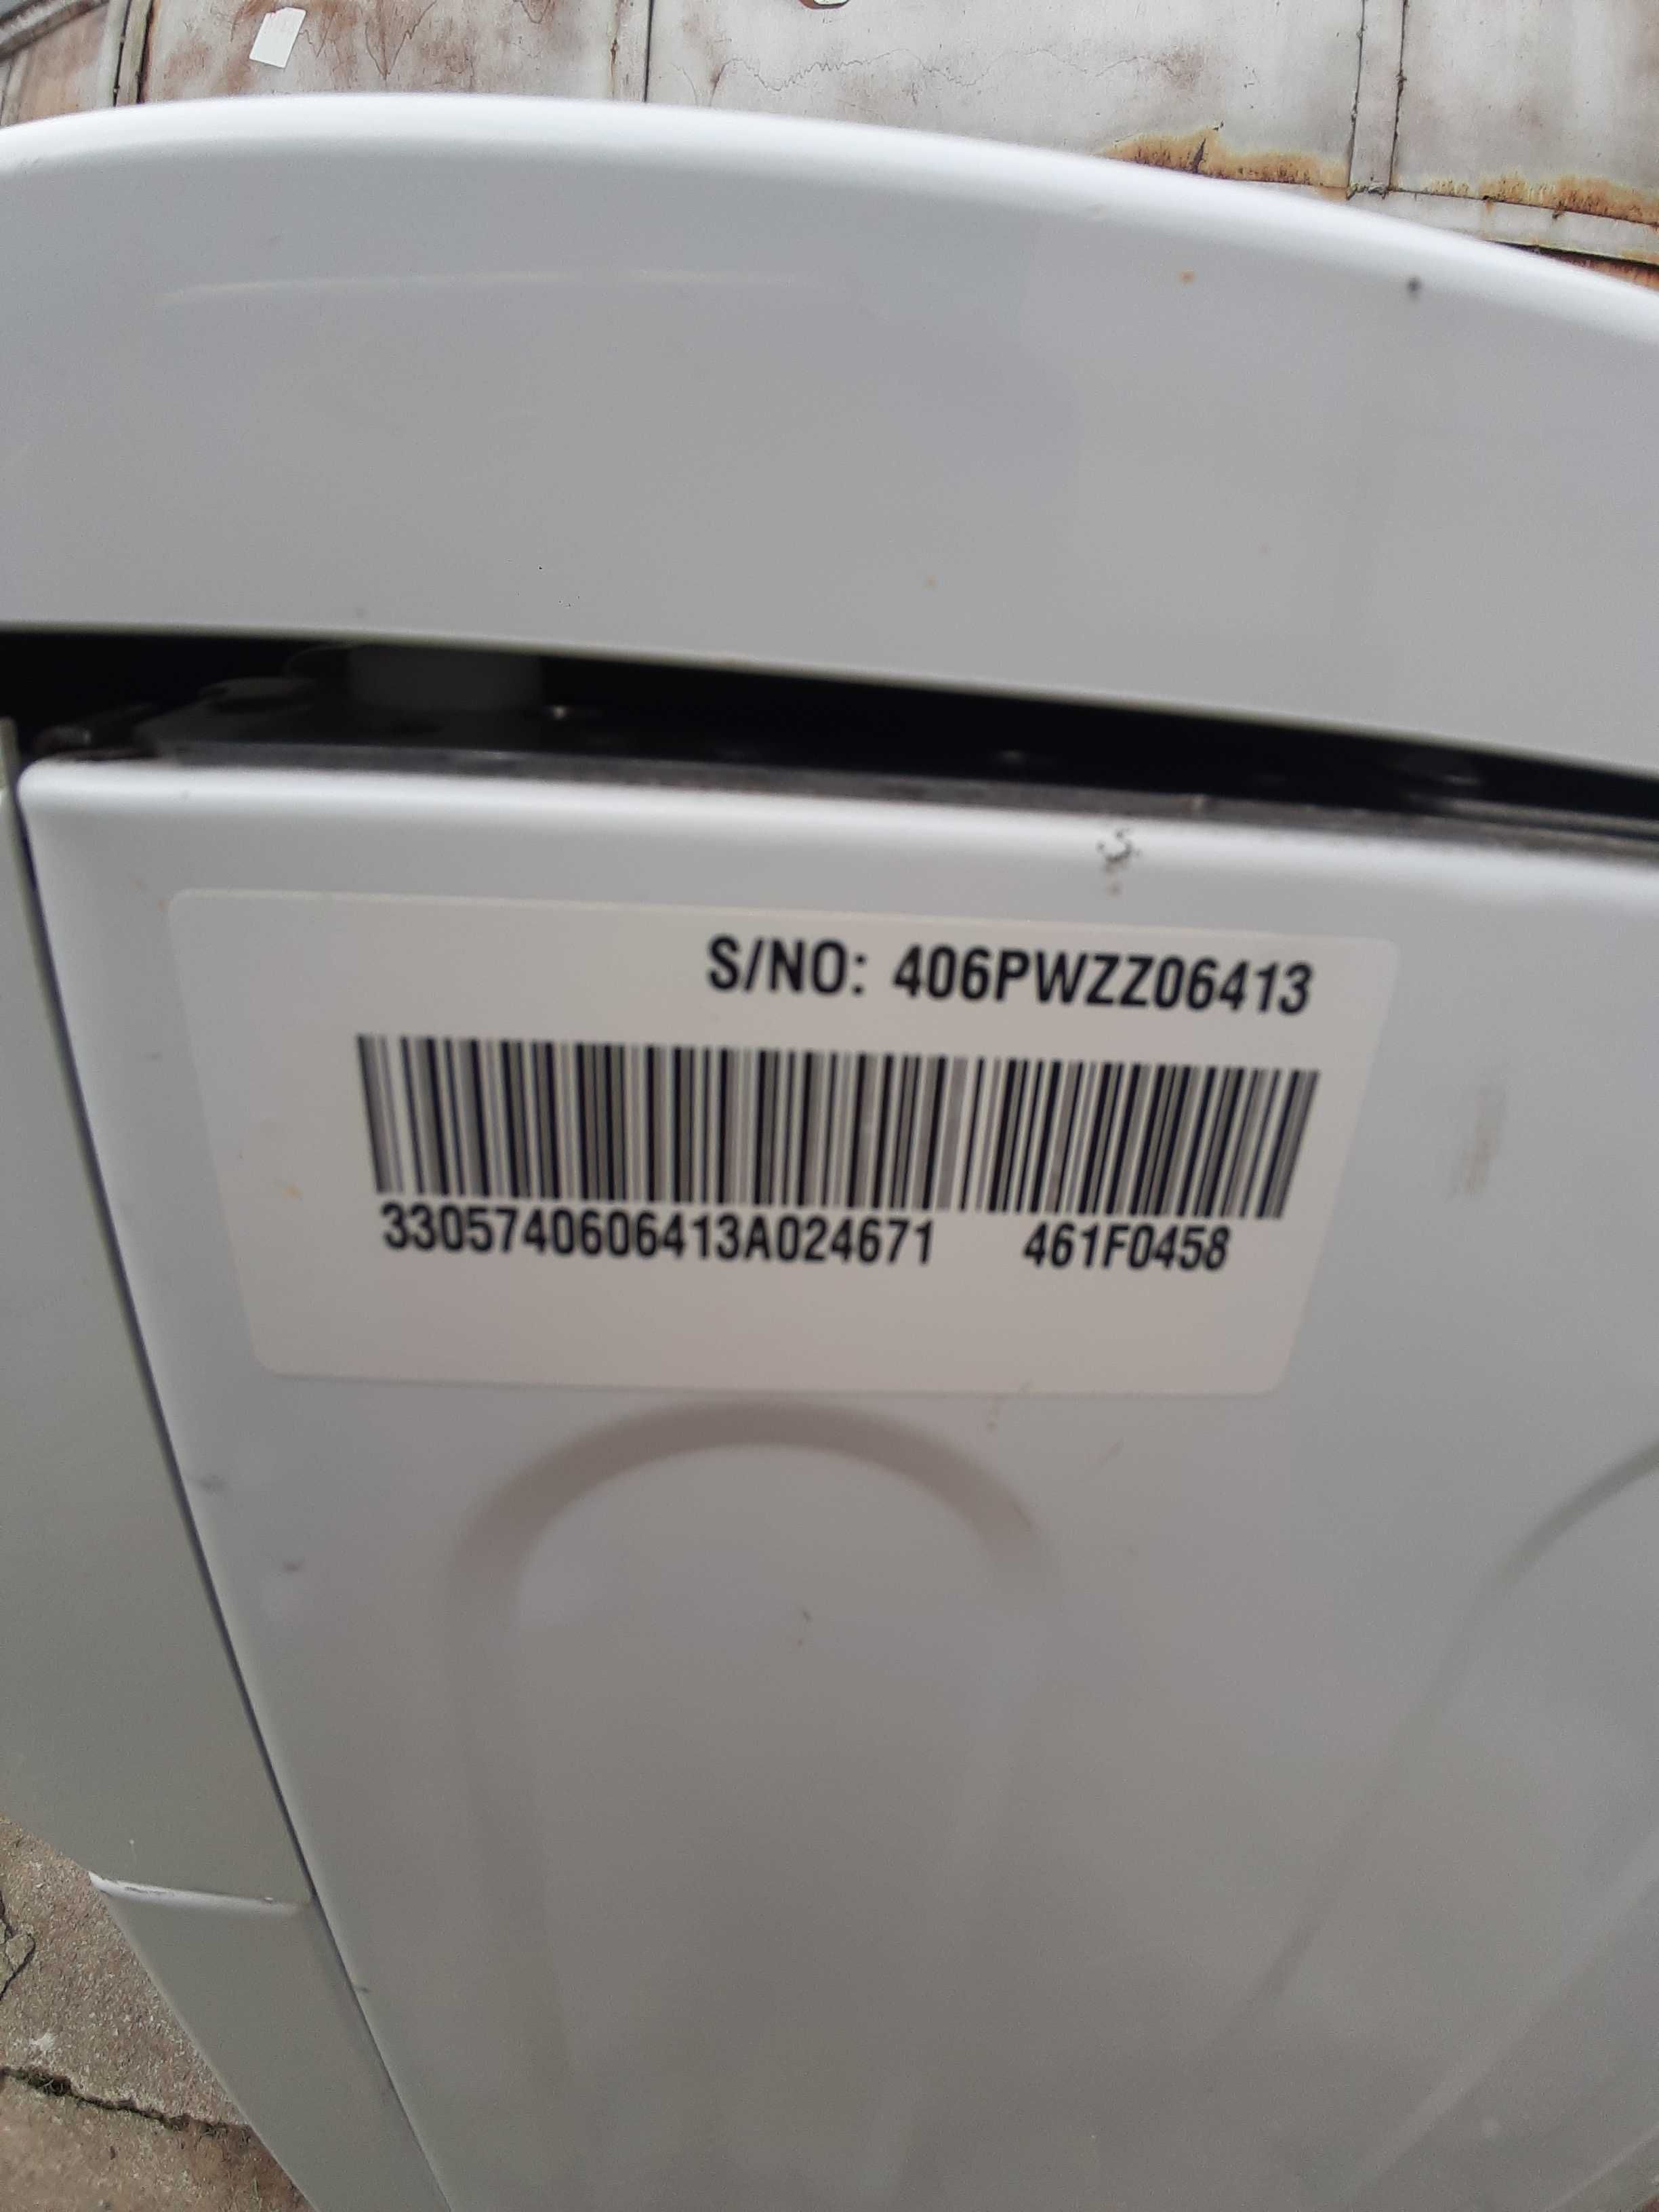 Dezmembrez masina de spalat rufe LG Inverter Direct Drive 6kg